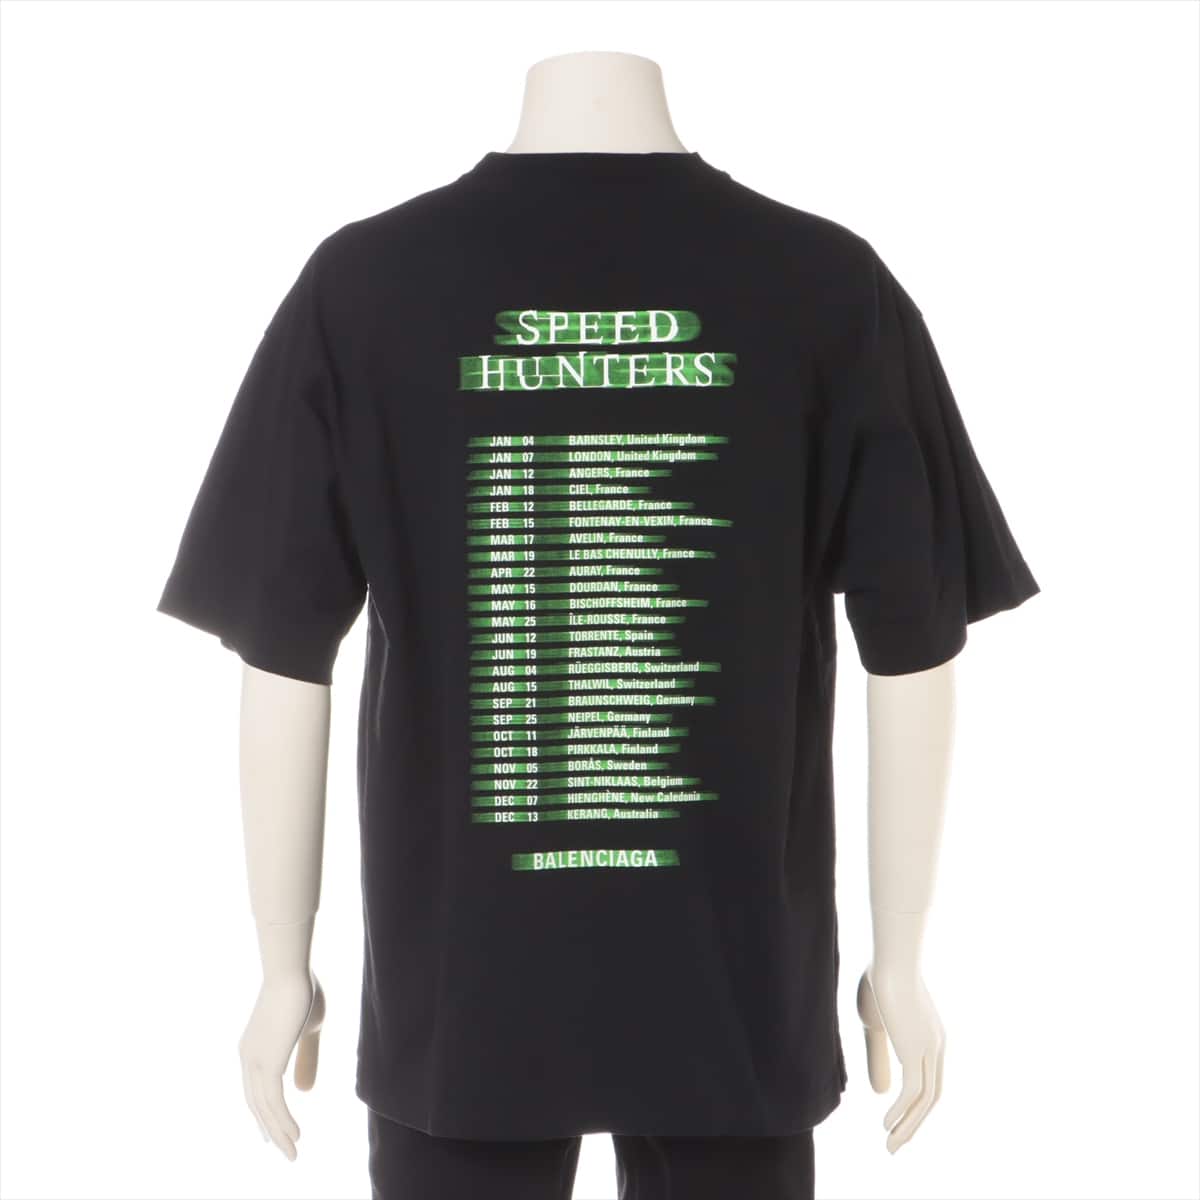 BALENCIAGA バレンシアガ 19SS Speed Hunters TEE スピードハンターズプリントオーバーサイズ半袖Tシャツ 556133 TCV38 ブラック